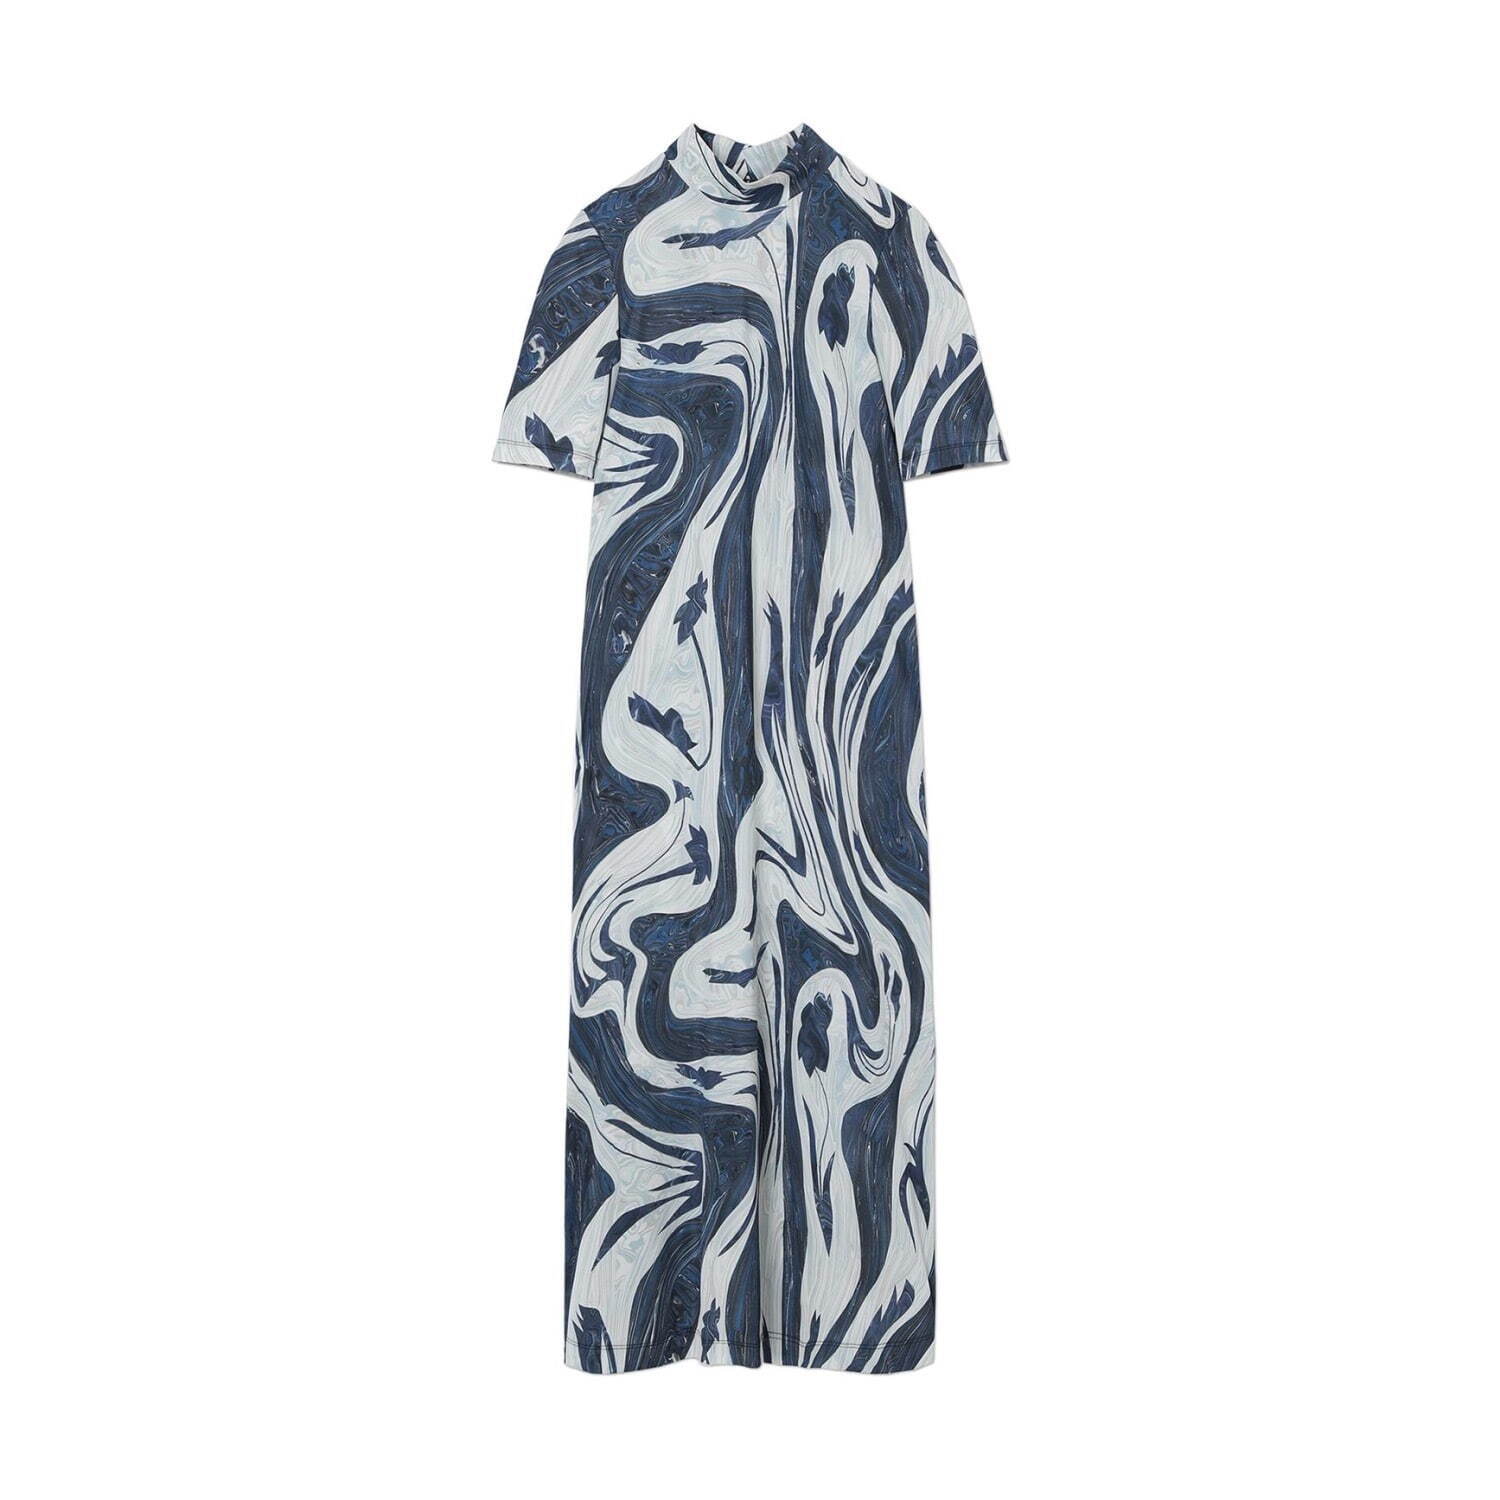 Marble Print Jersey A-Line Dress 52,800円